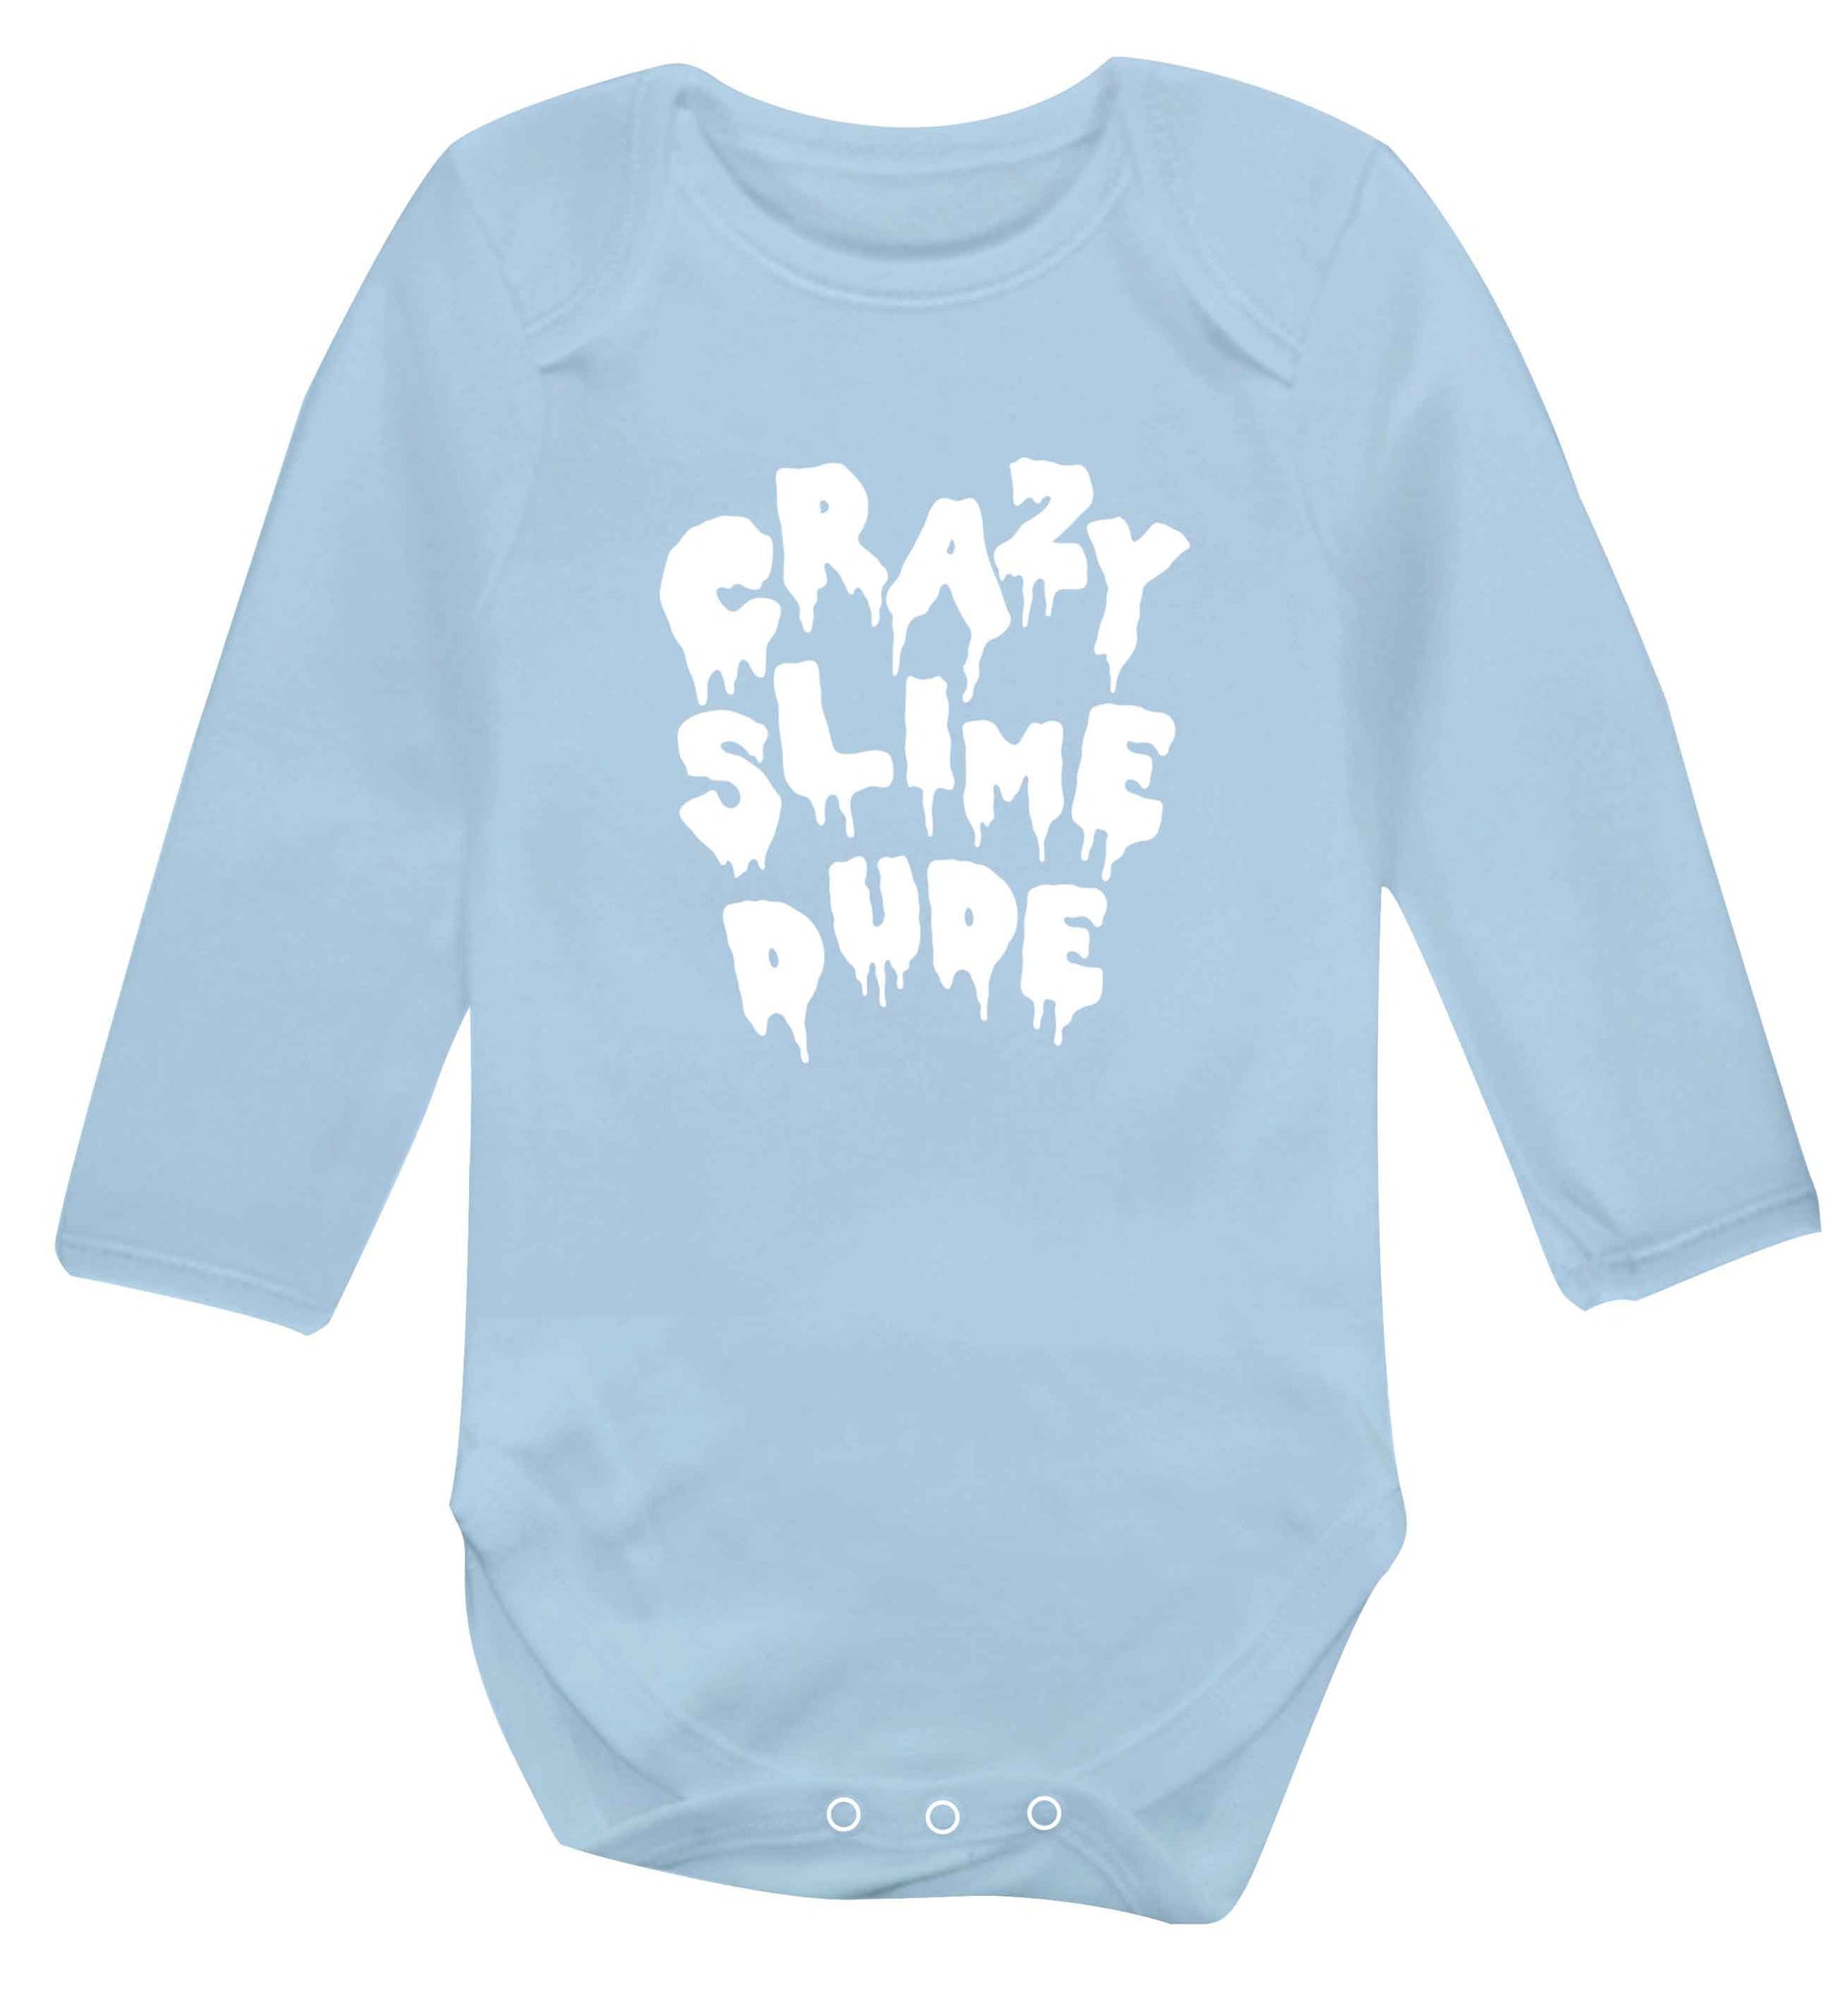 Crazy slime dude baby vest long sleeved pale blue 6-12 months